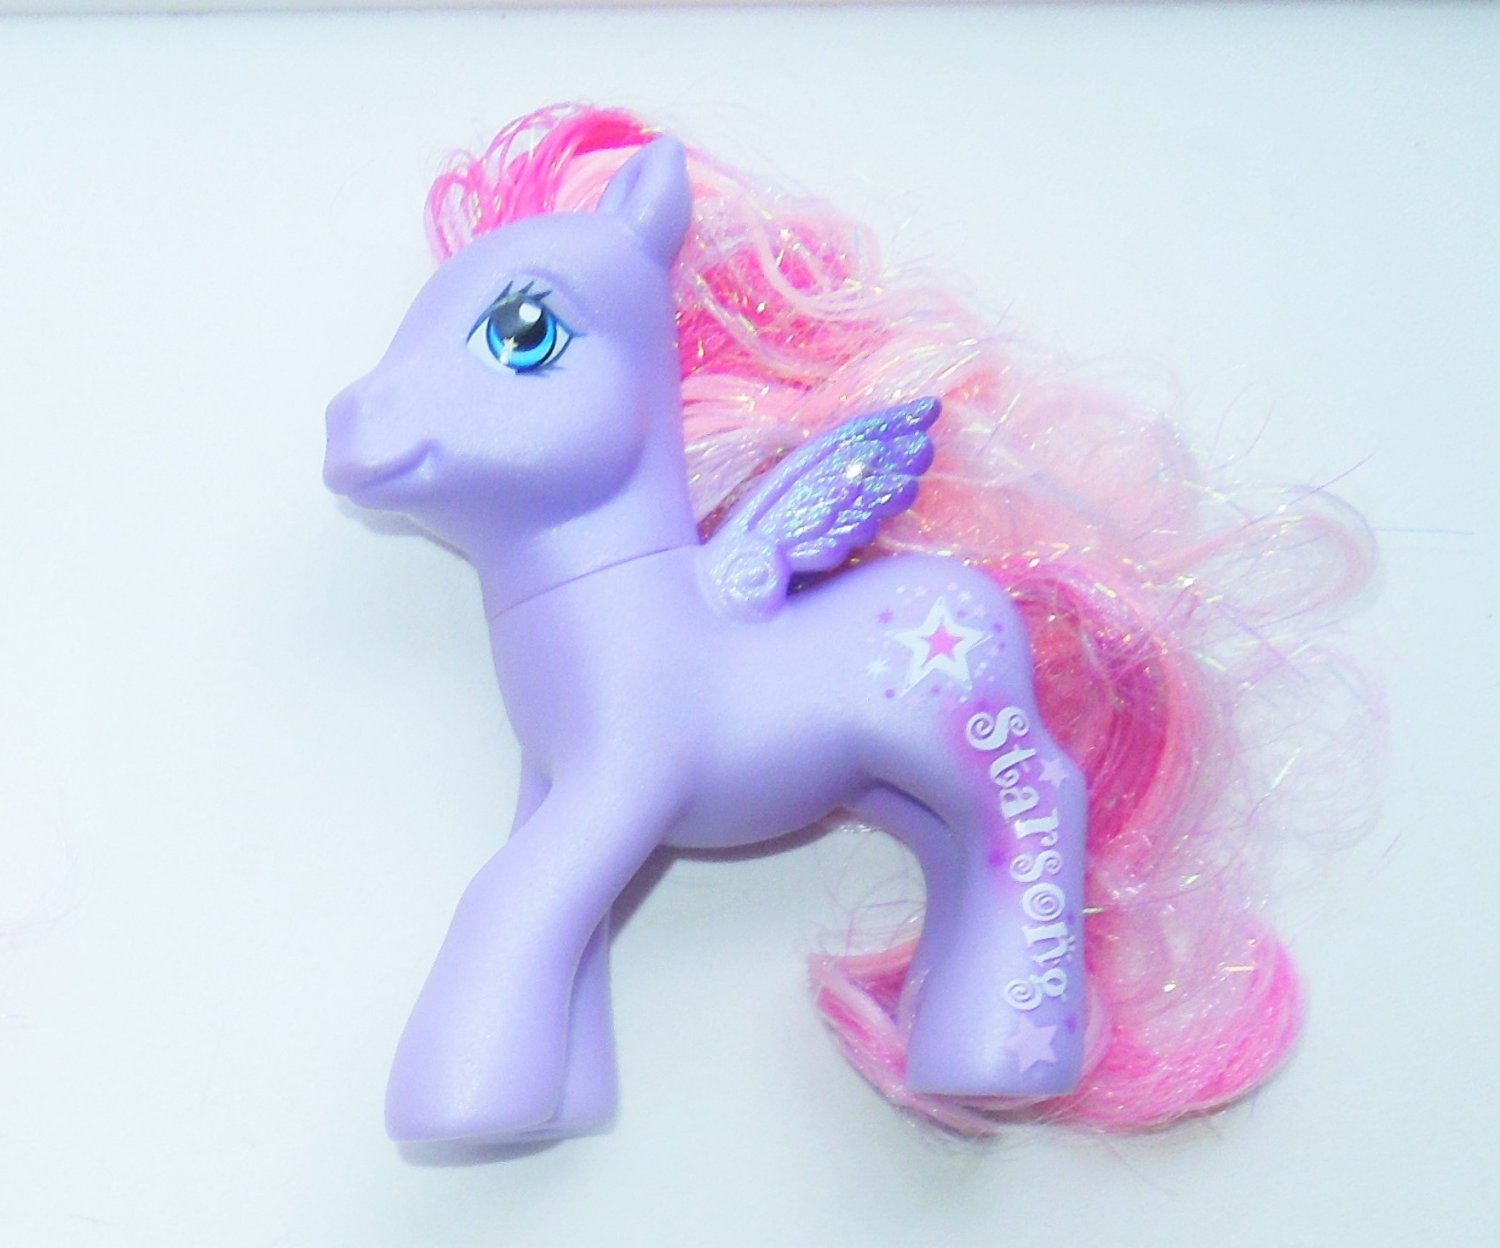 Pony g3. Starsong g3. Hasbro Pony g3.5. Hasbro Pony g2. G3 Pony Pegasus Toy.